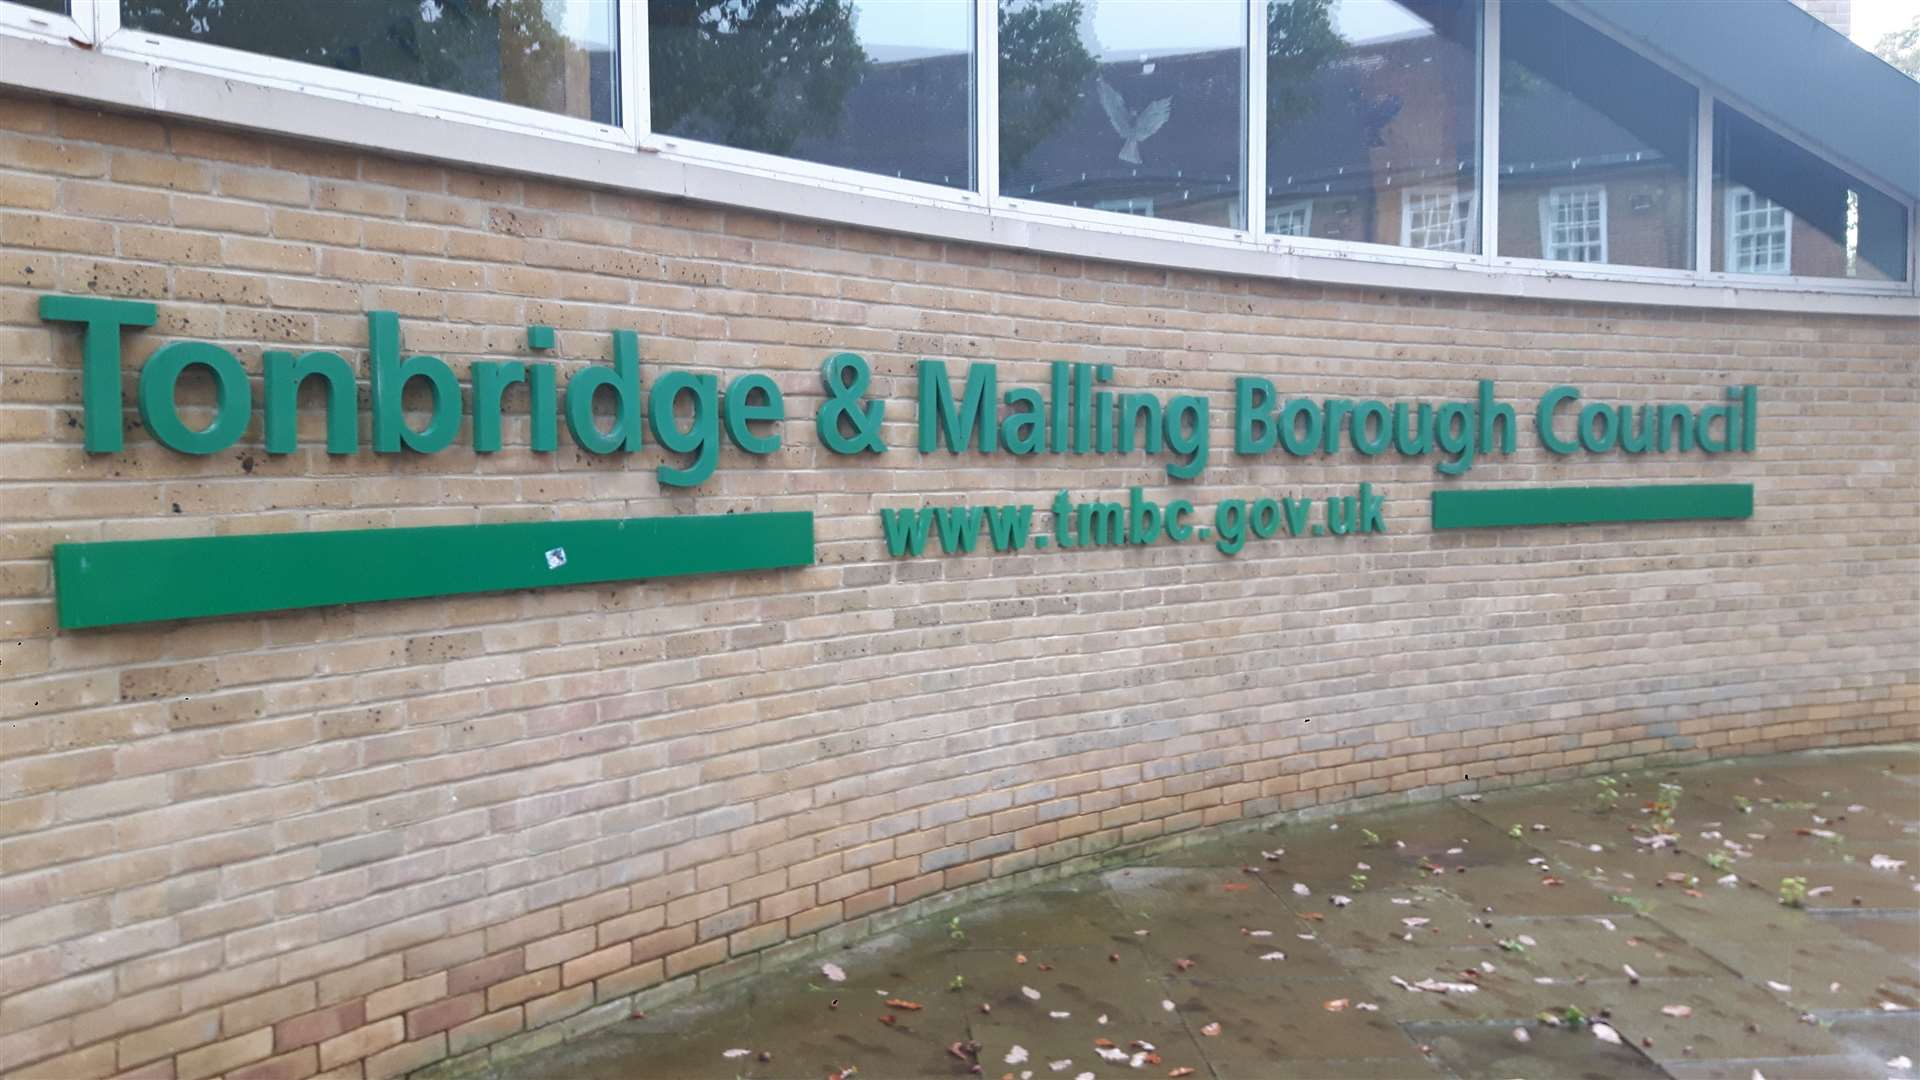 Big changes ahead at Tonbridge and Malling council?